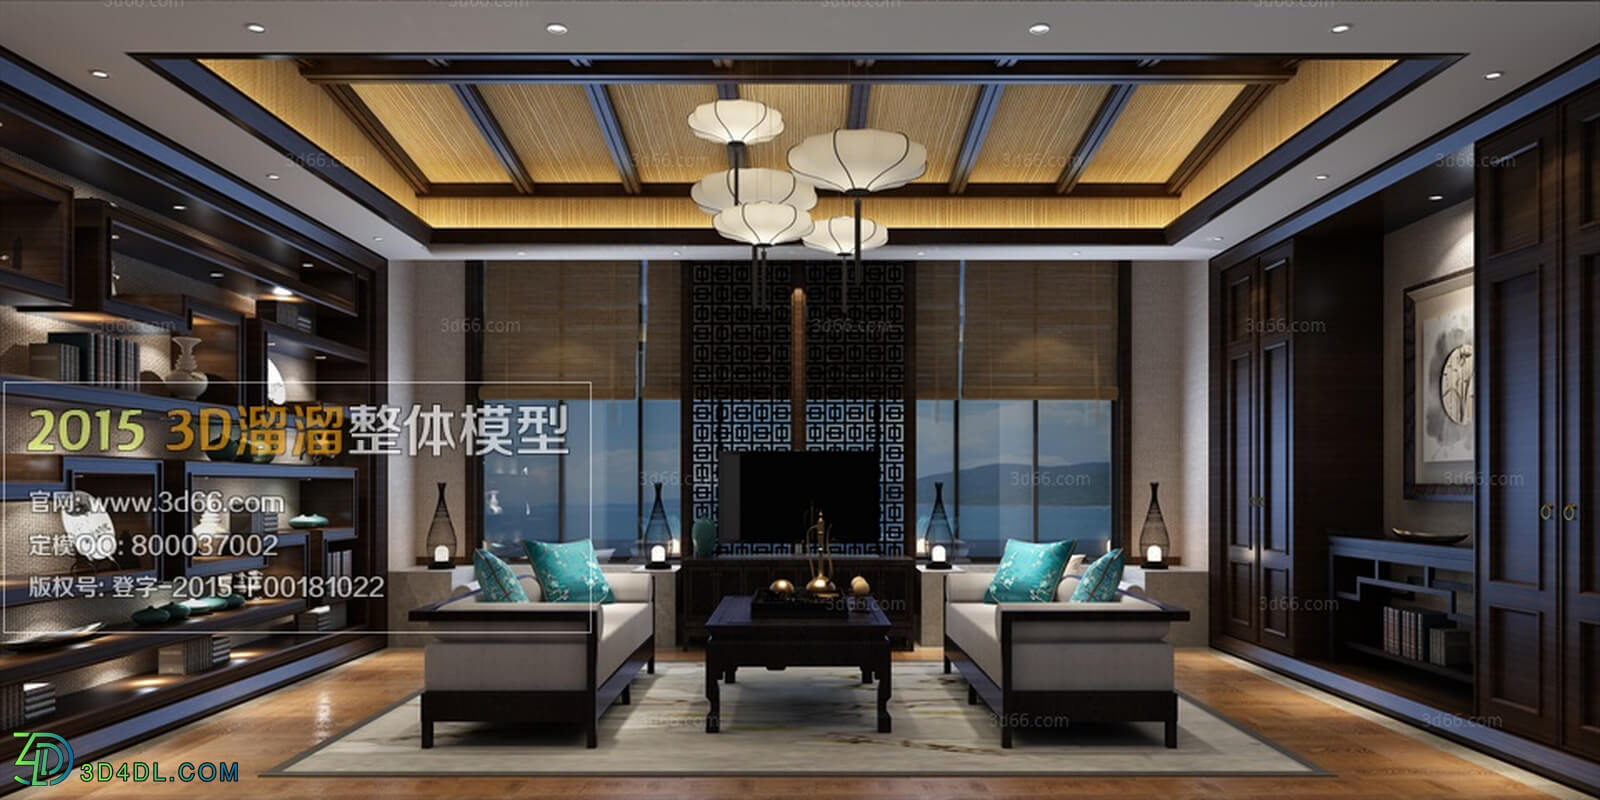 3D66 Sounth Asia Style Livingroom 2015 (274)